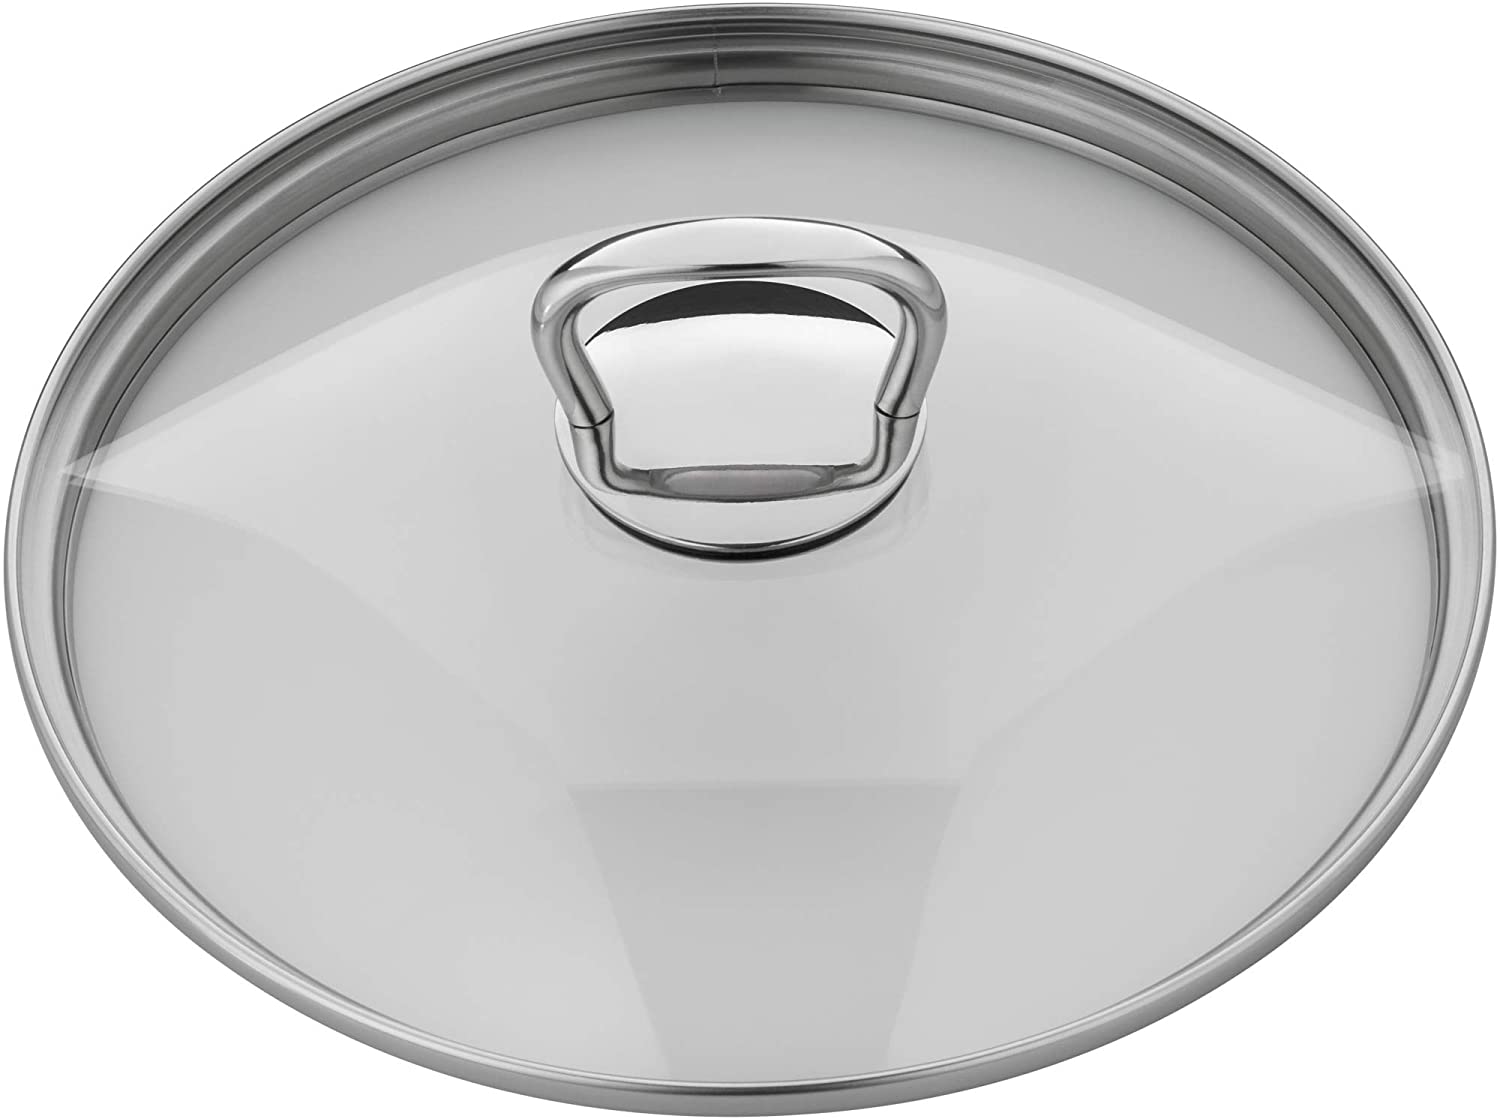 WMF glass lid, 20 cm, pot lid with square metal handle, heat-resistant glass, dishwasher safe